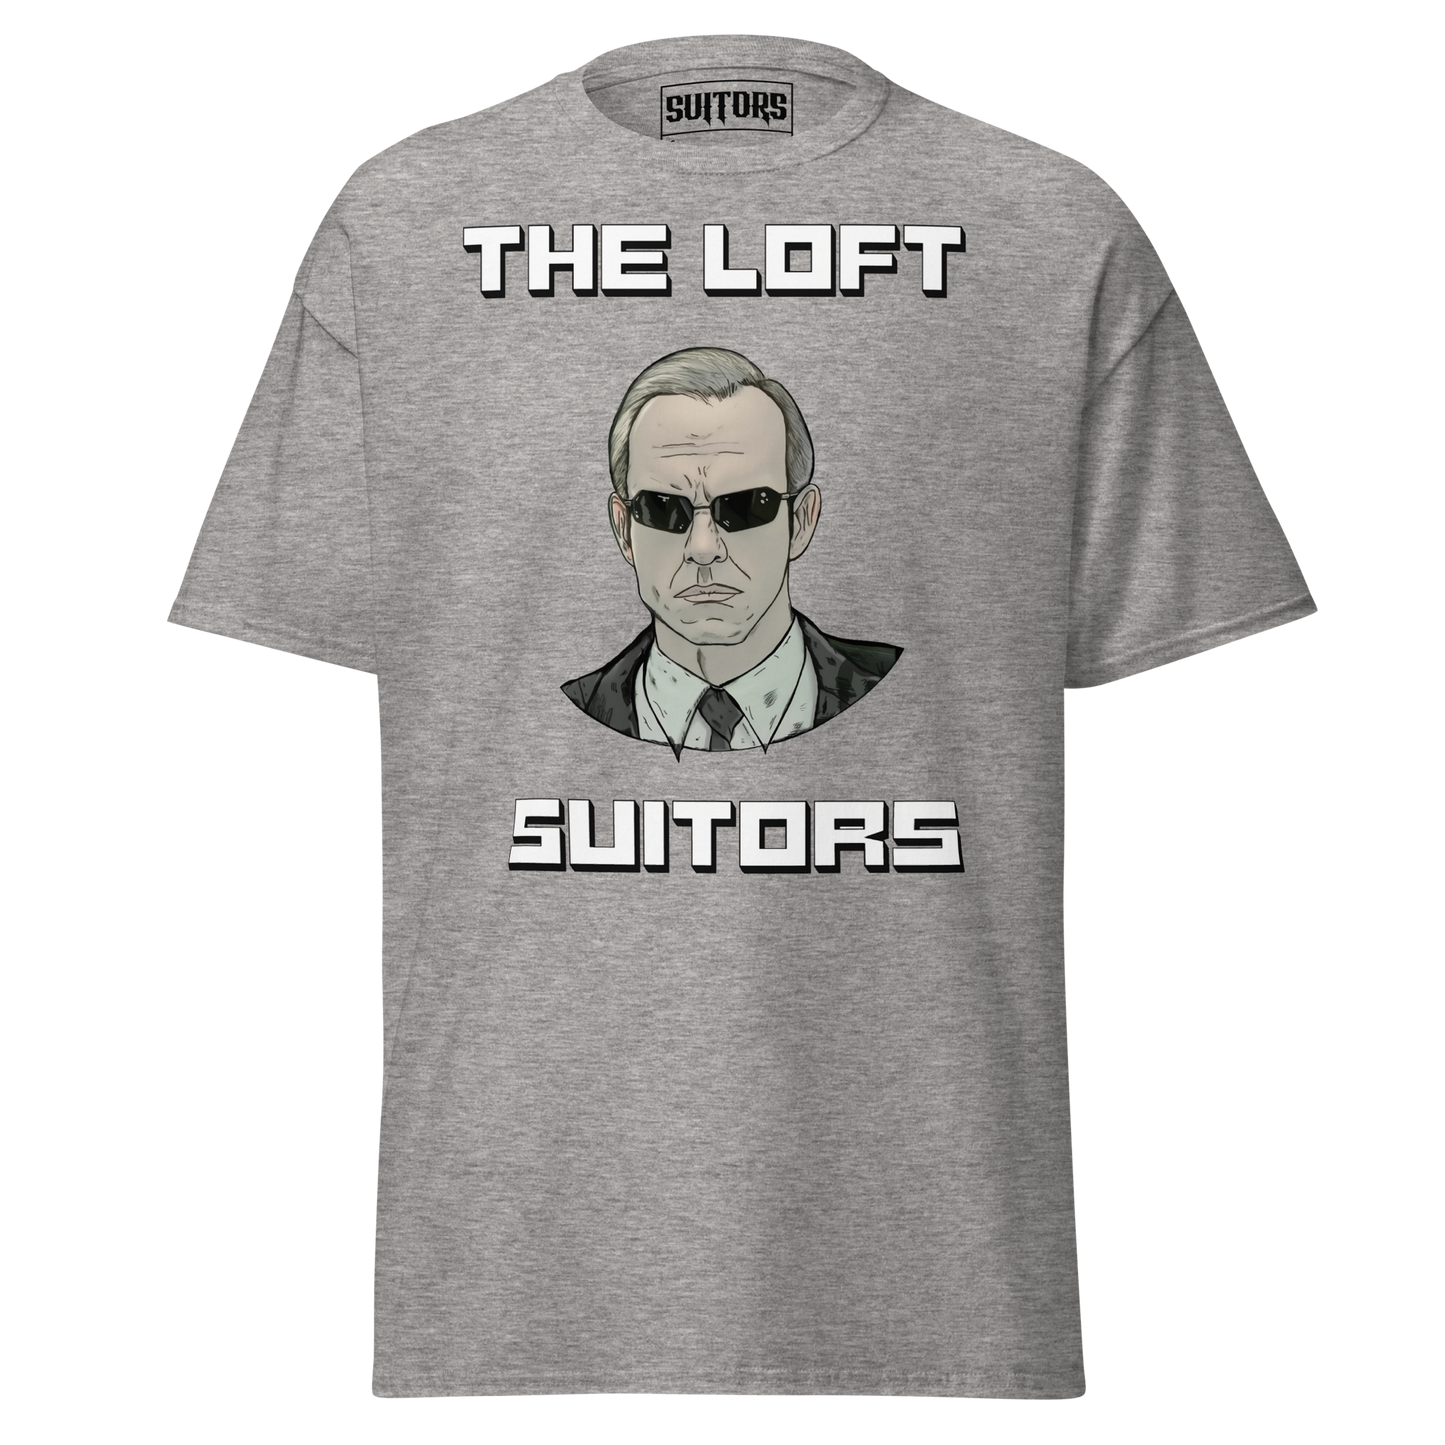 The LOFT - Agent Smith Tee